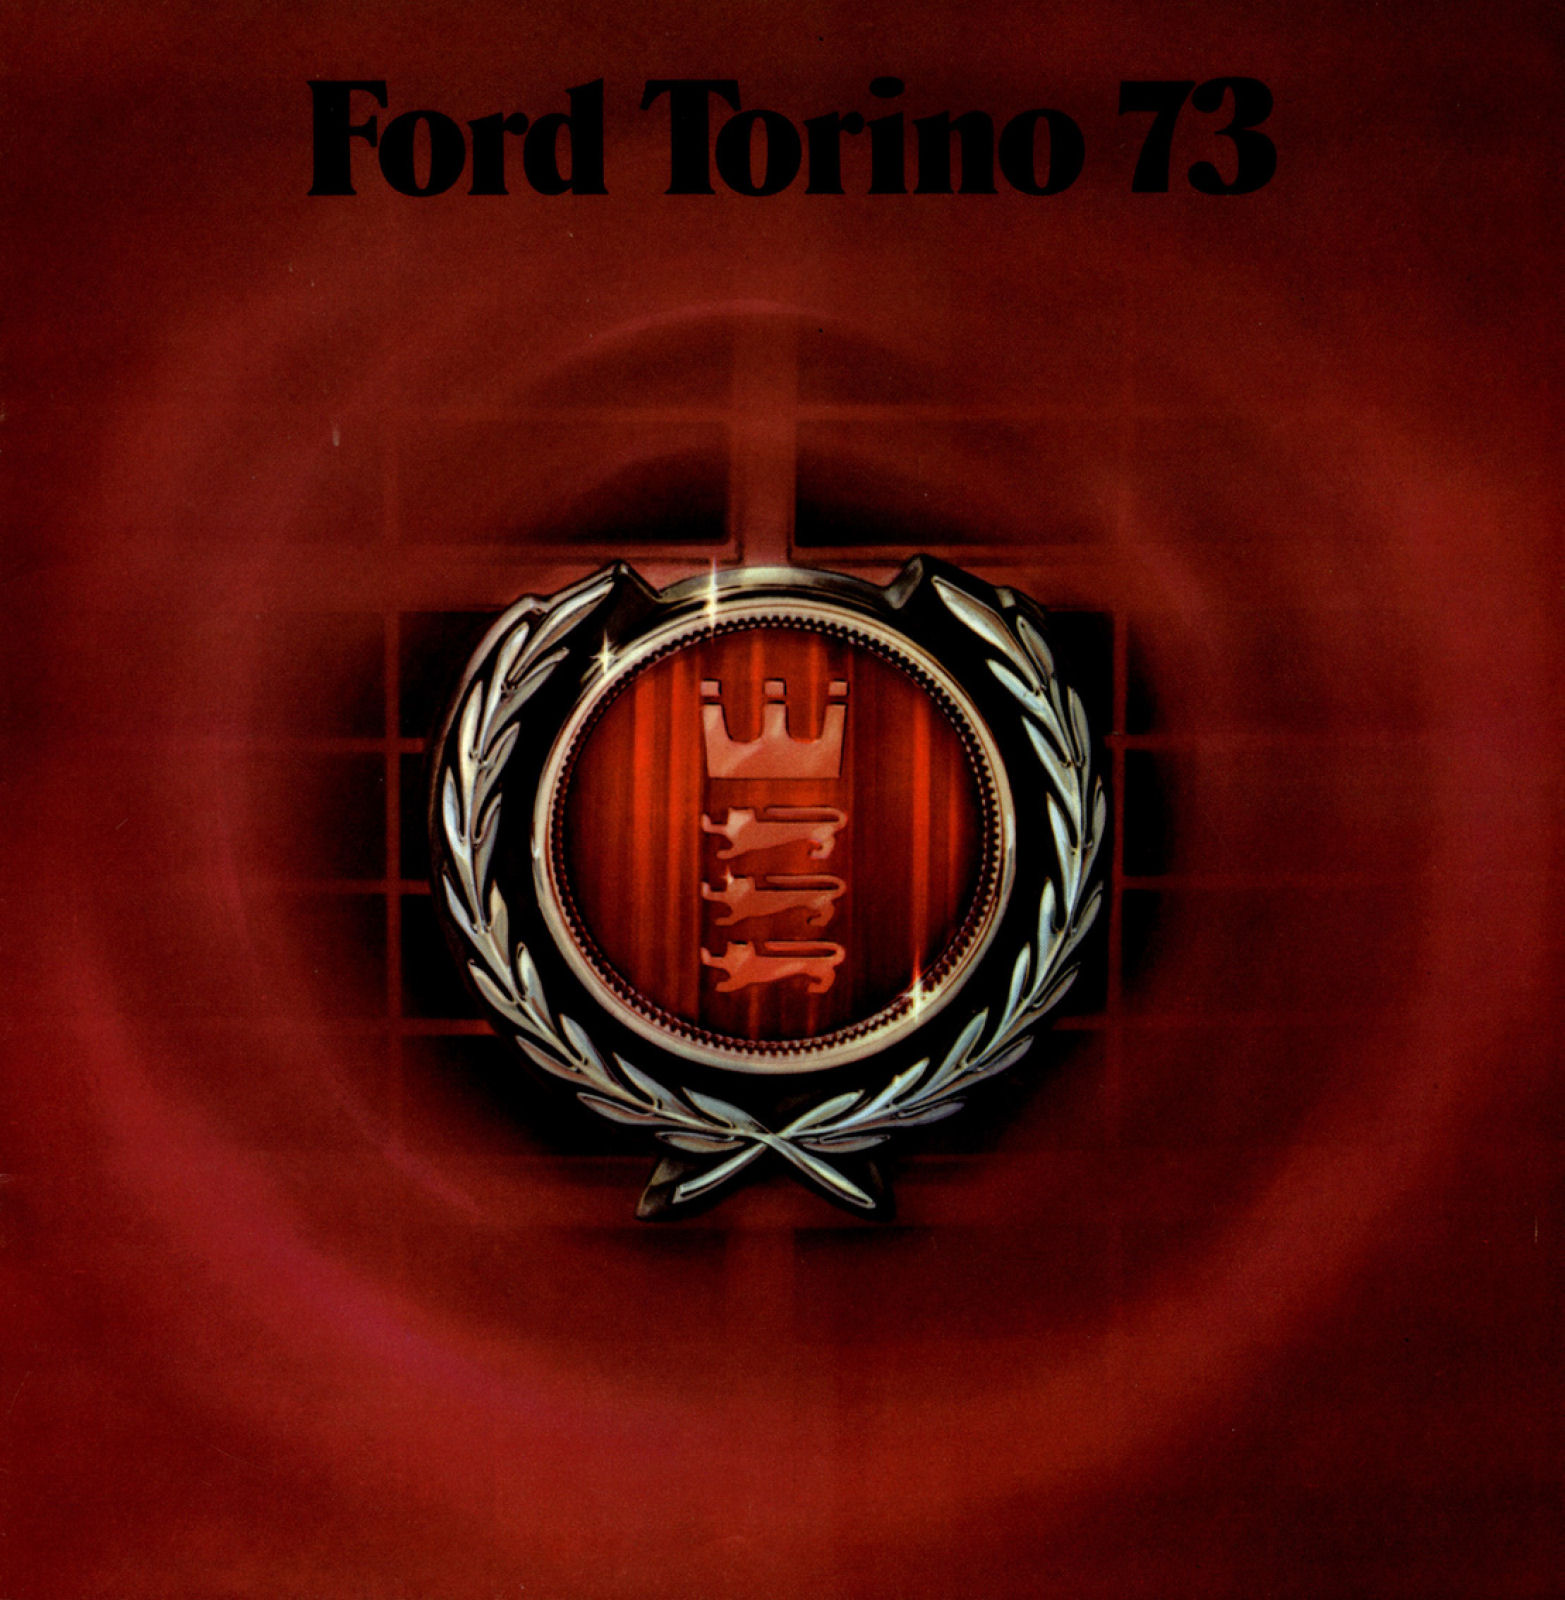 1973 Ford Torino (Cdn) Rev-01